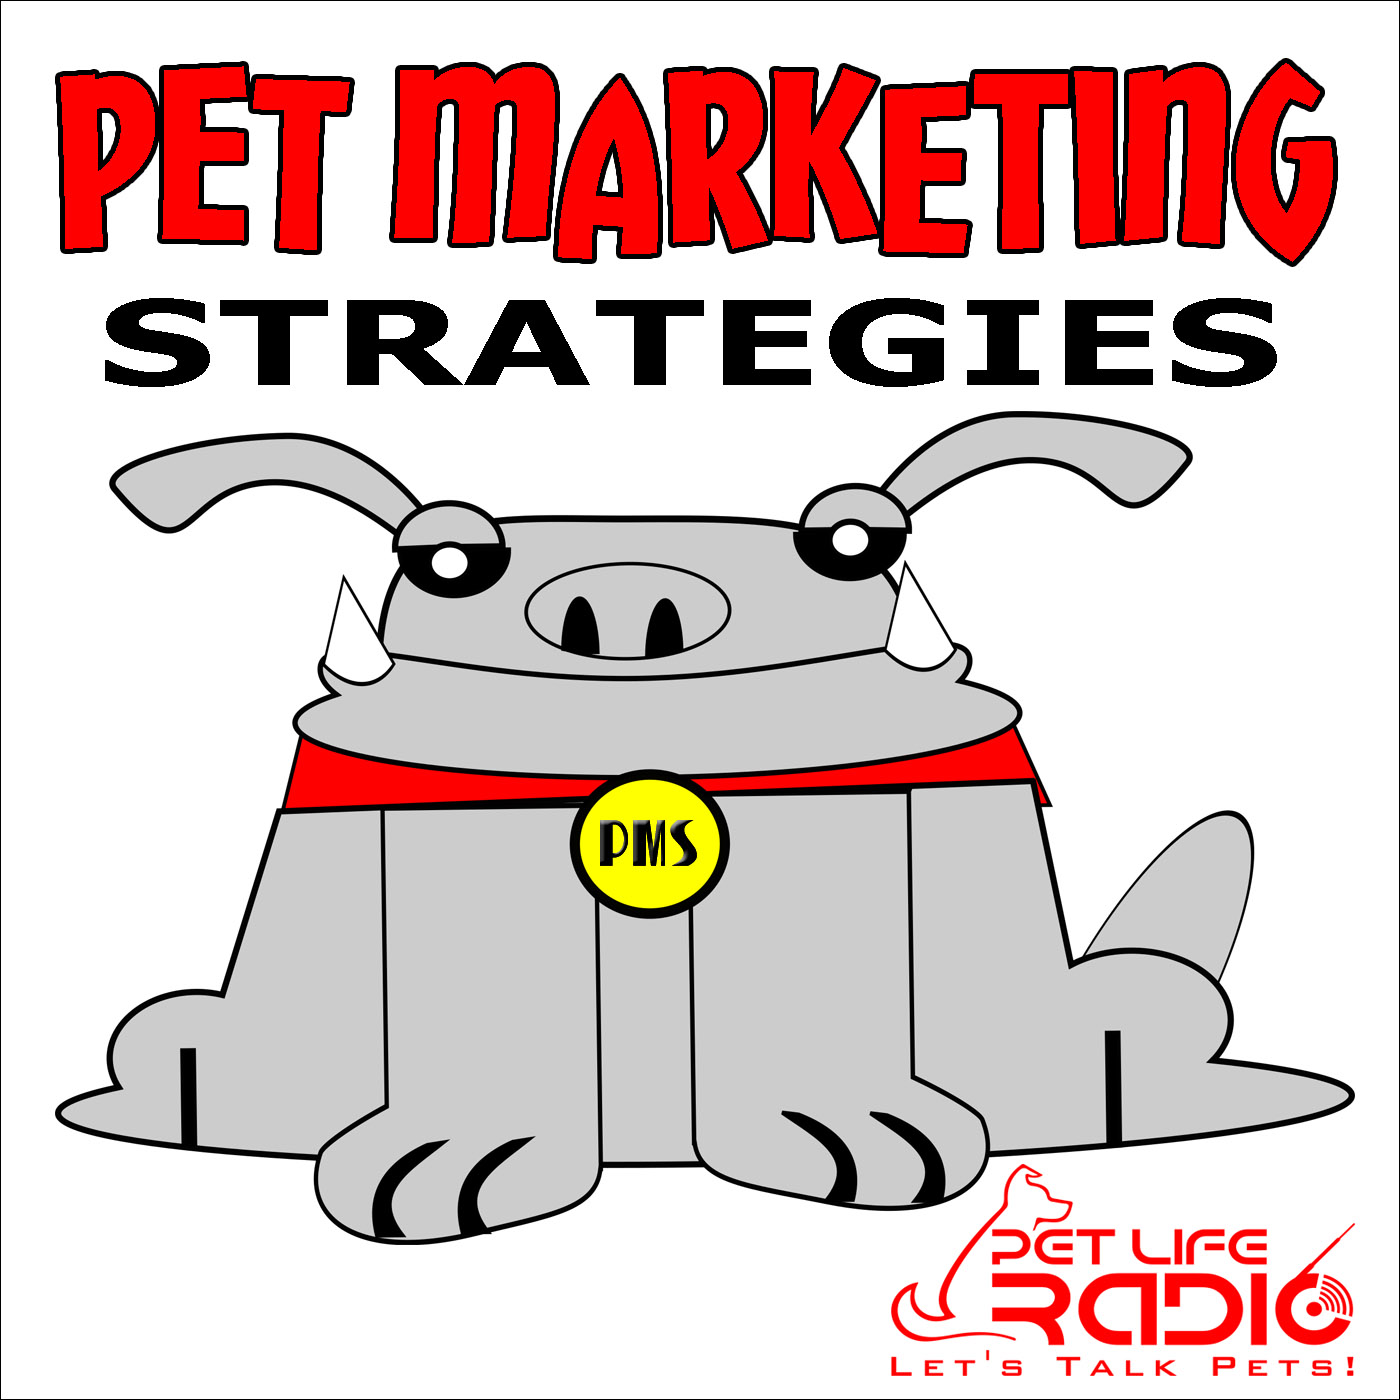 P.M.S. - Pet Marketing Strategies for the Petpreneur - Pets & Animals on Pet Life Radio (PetLifeRadio.com)